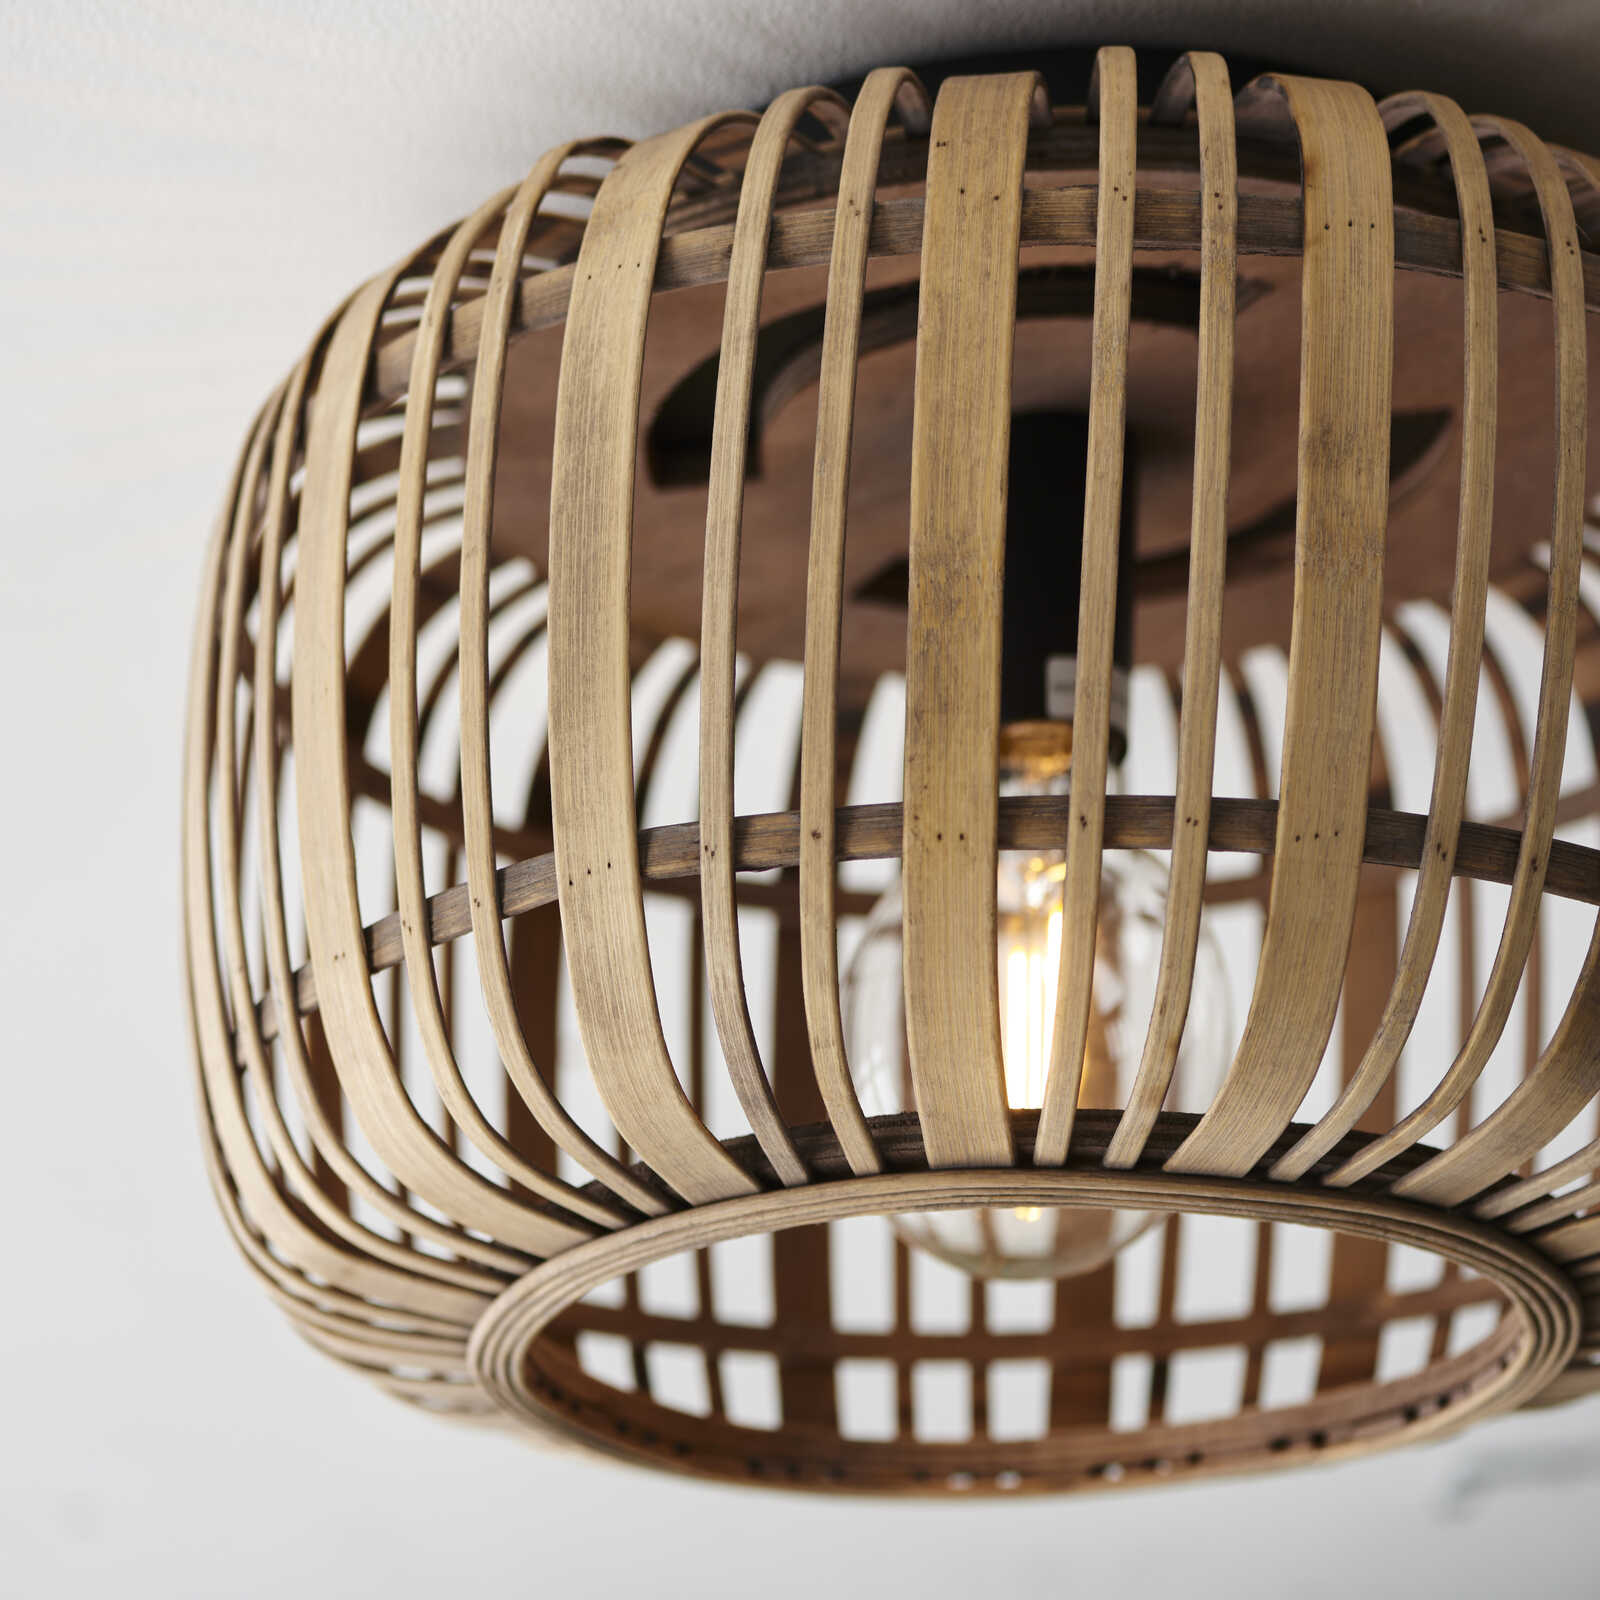             Bamboe plafondlamp - Willi 6 - Bruin
        